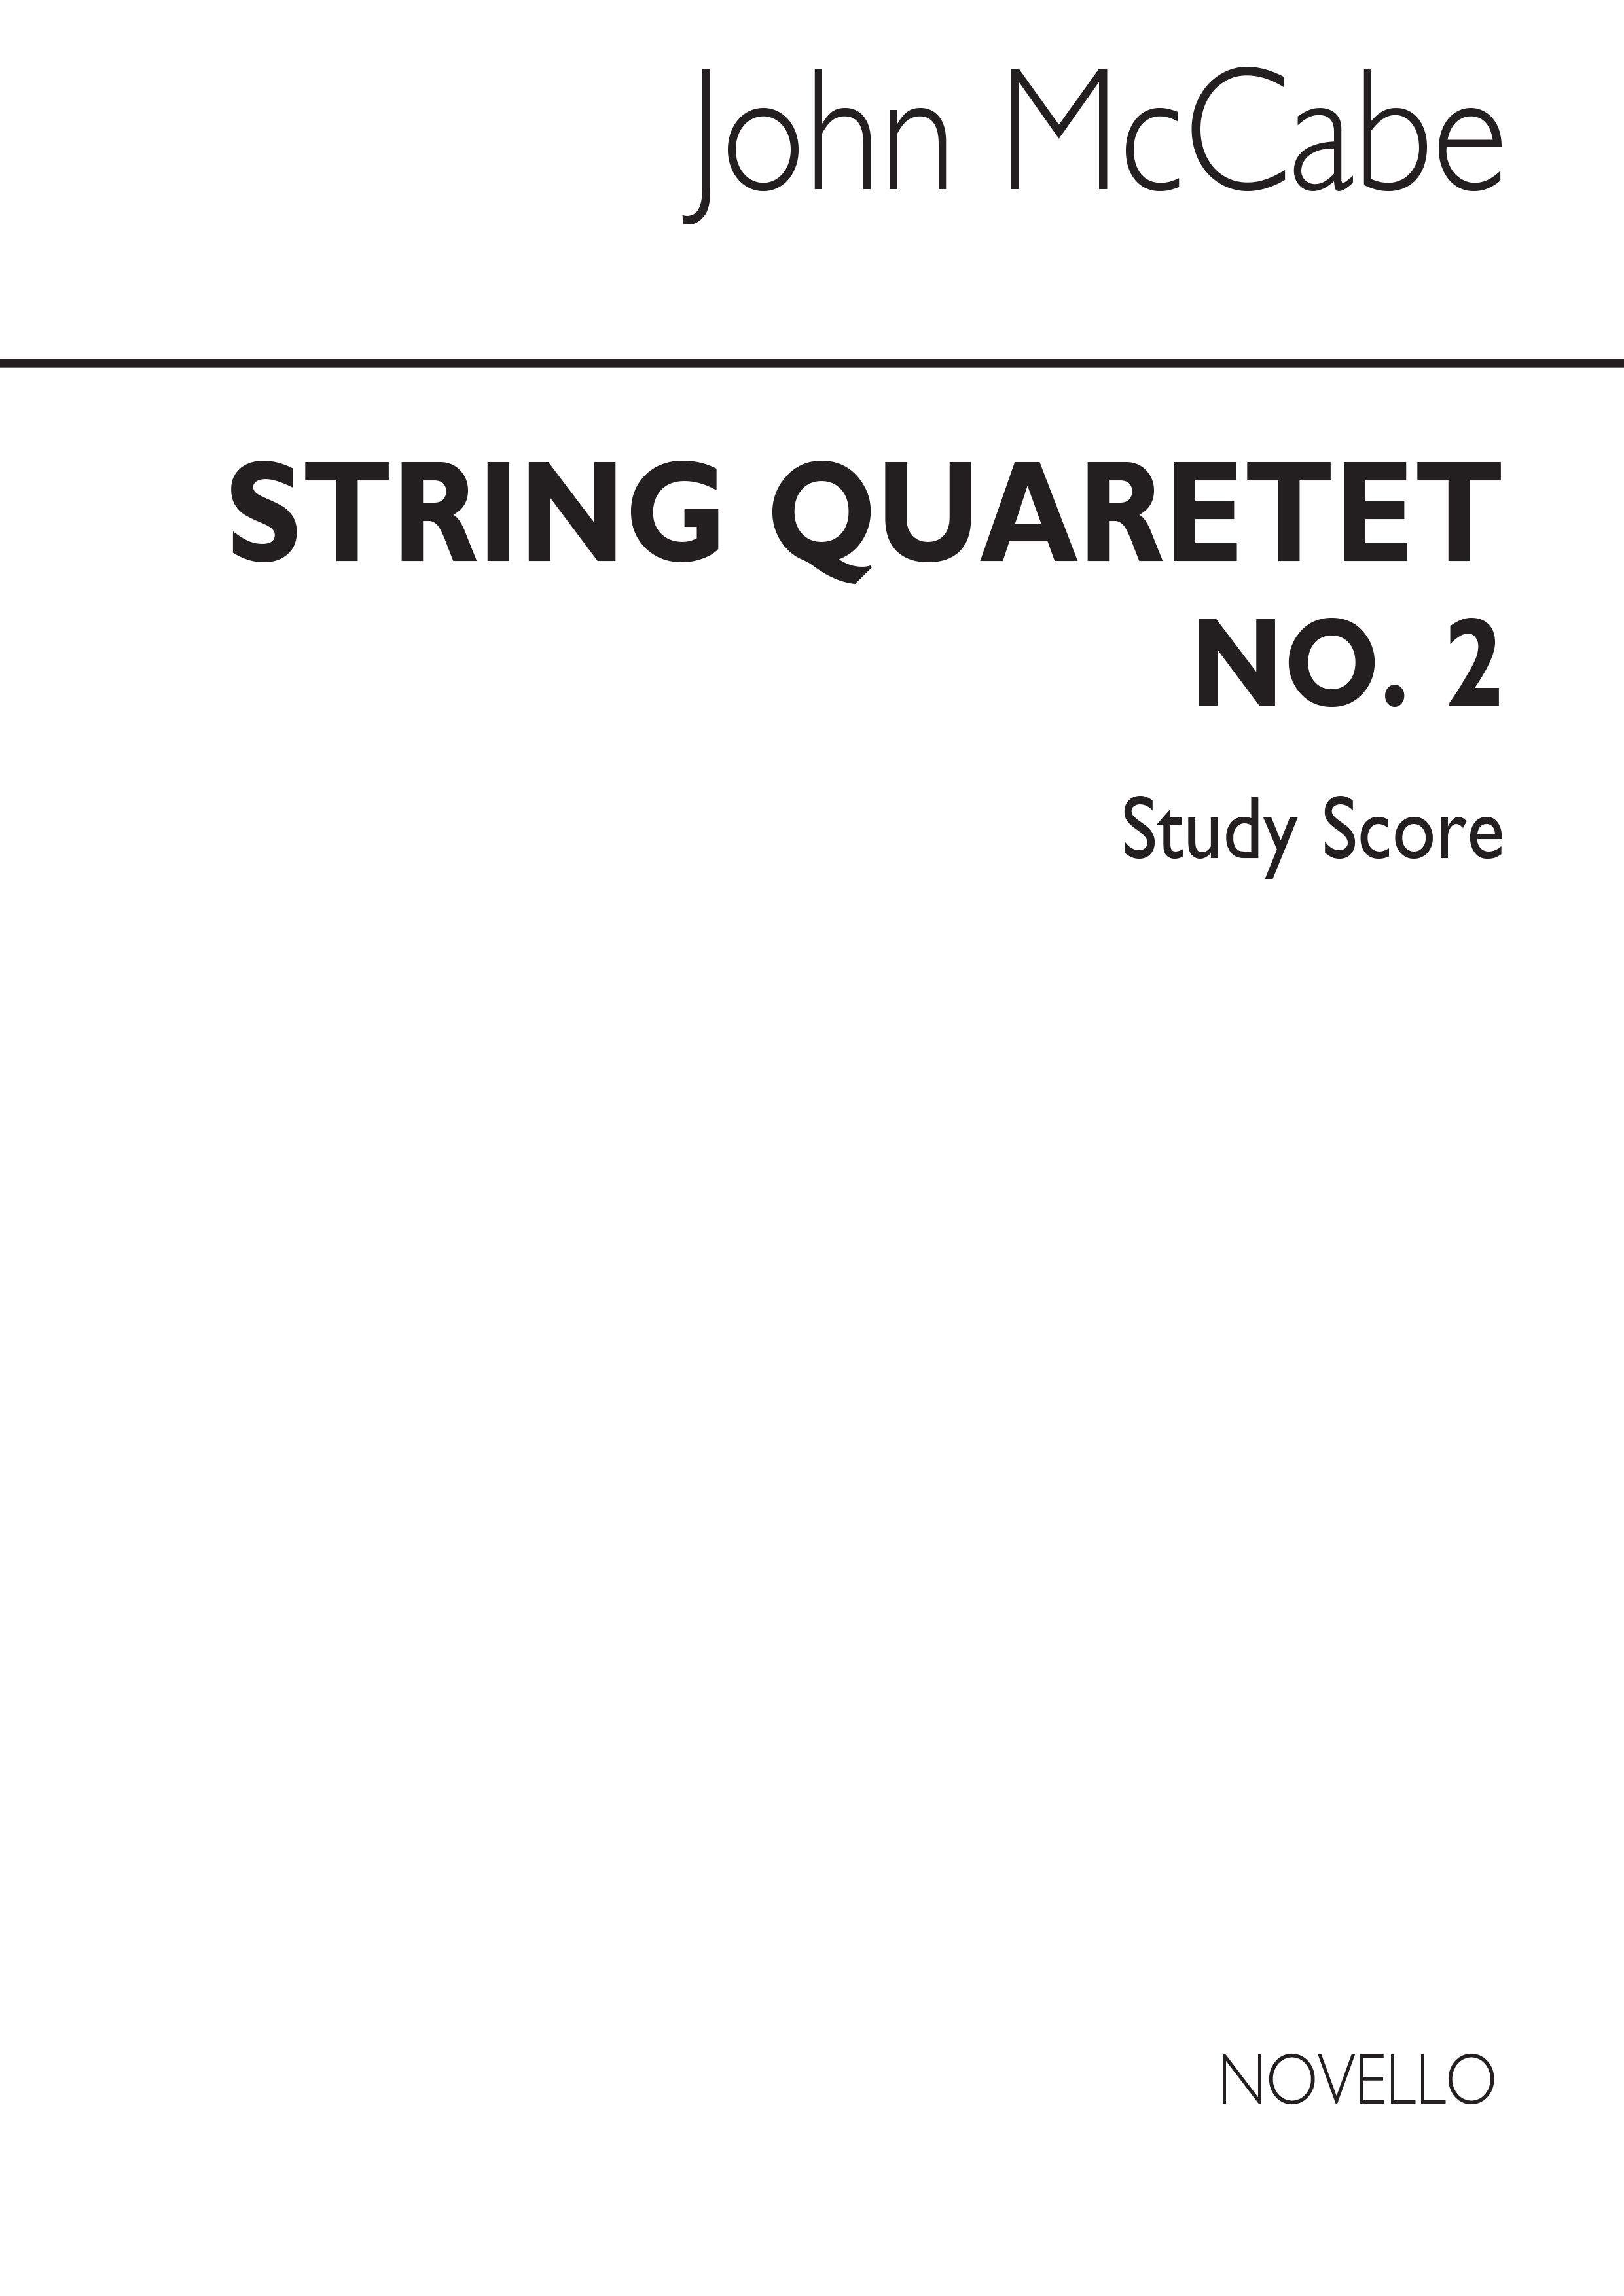 McCabe: String Quartet No.2 (Study Score)